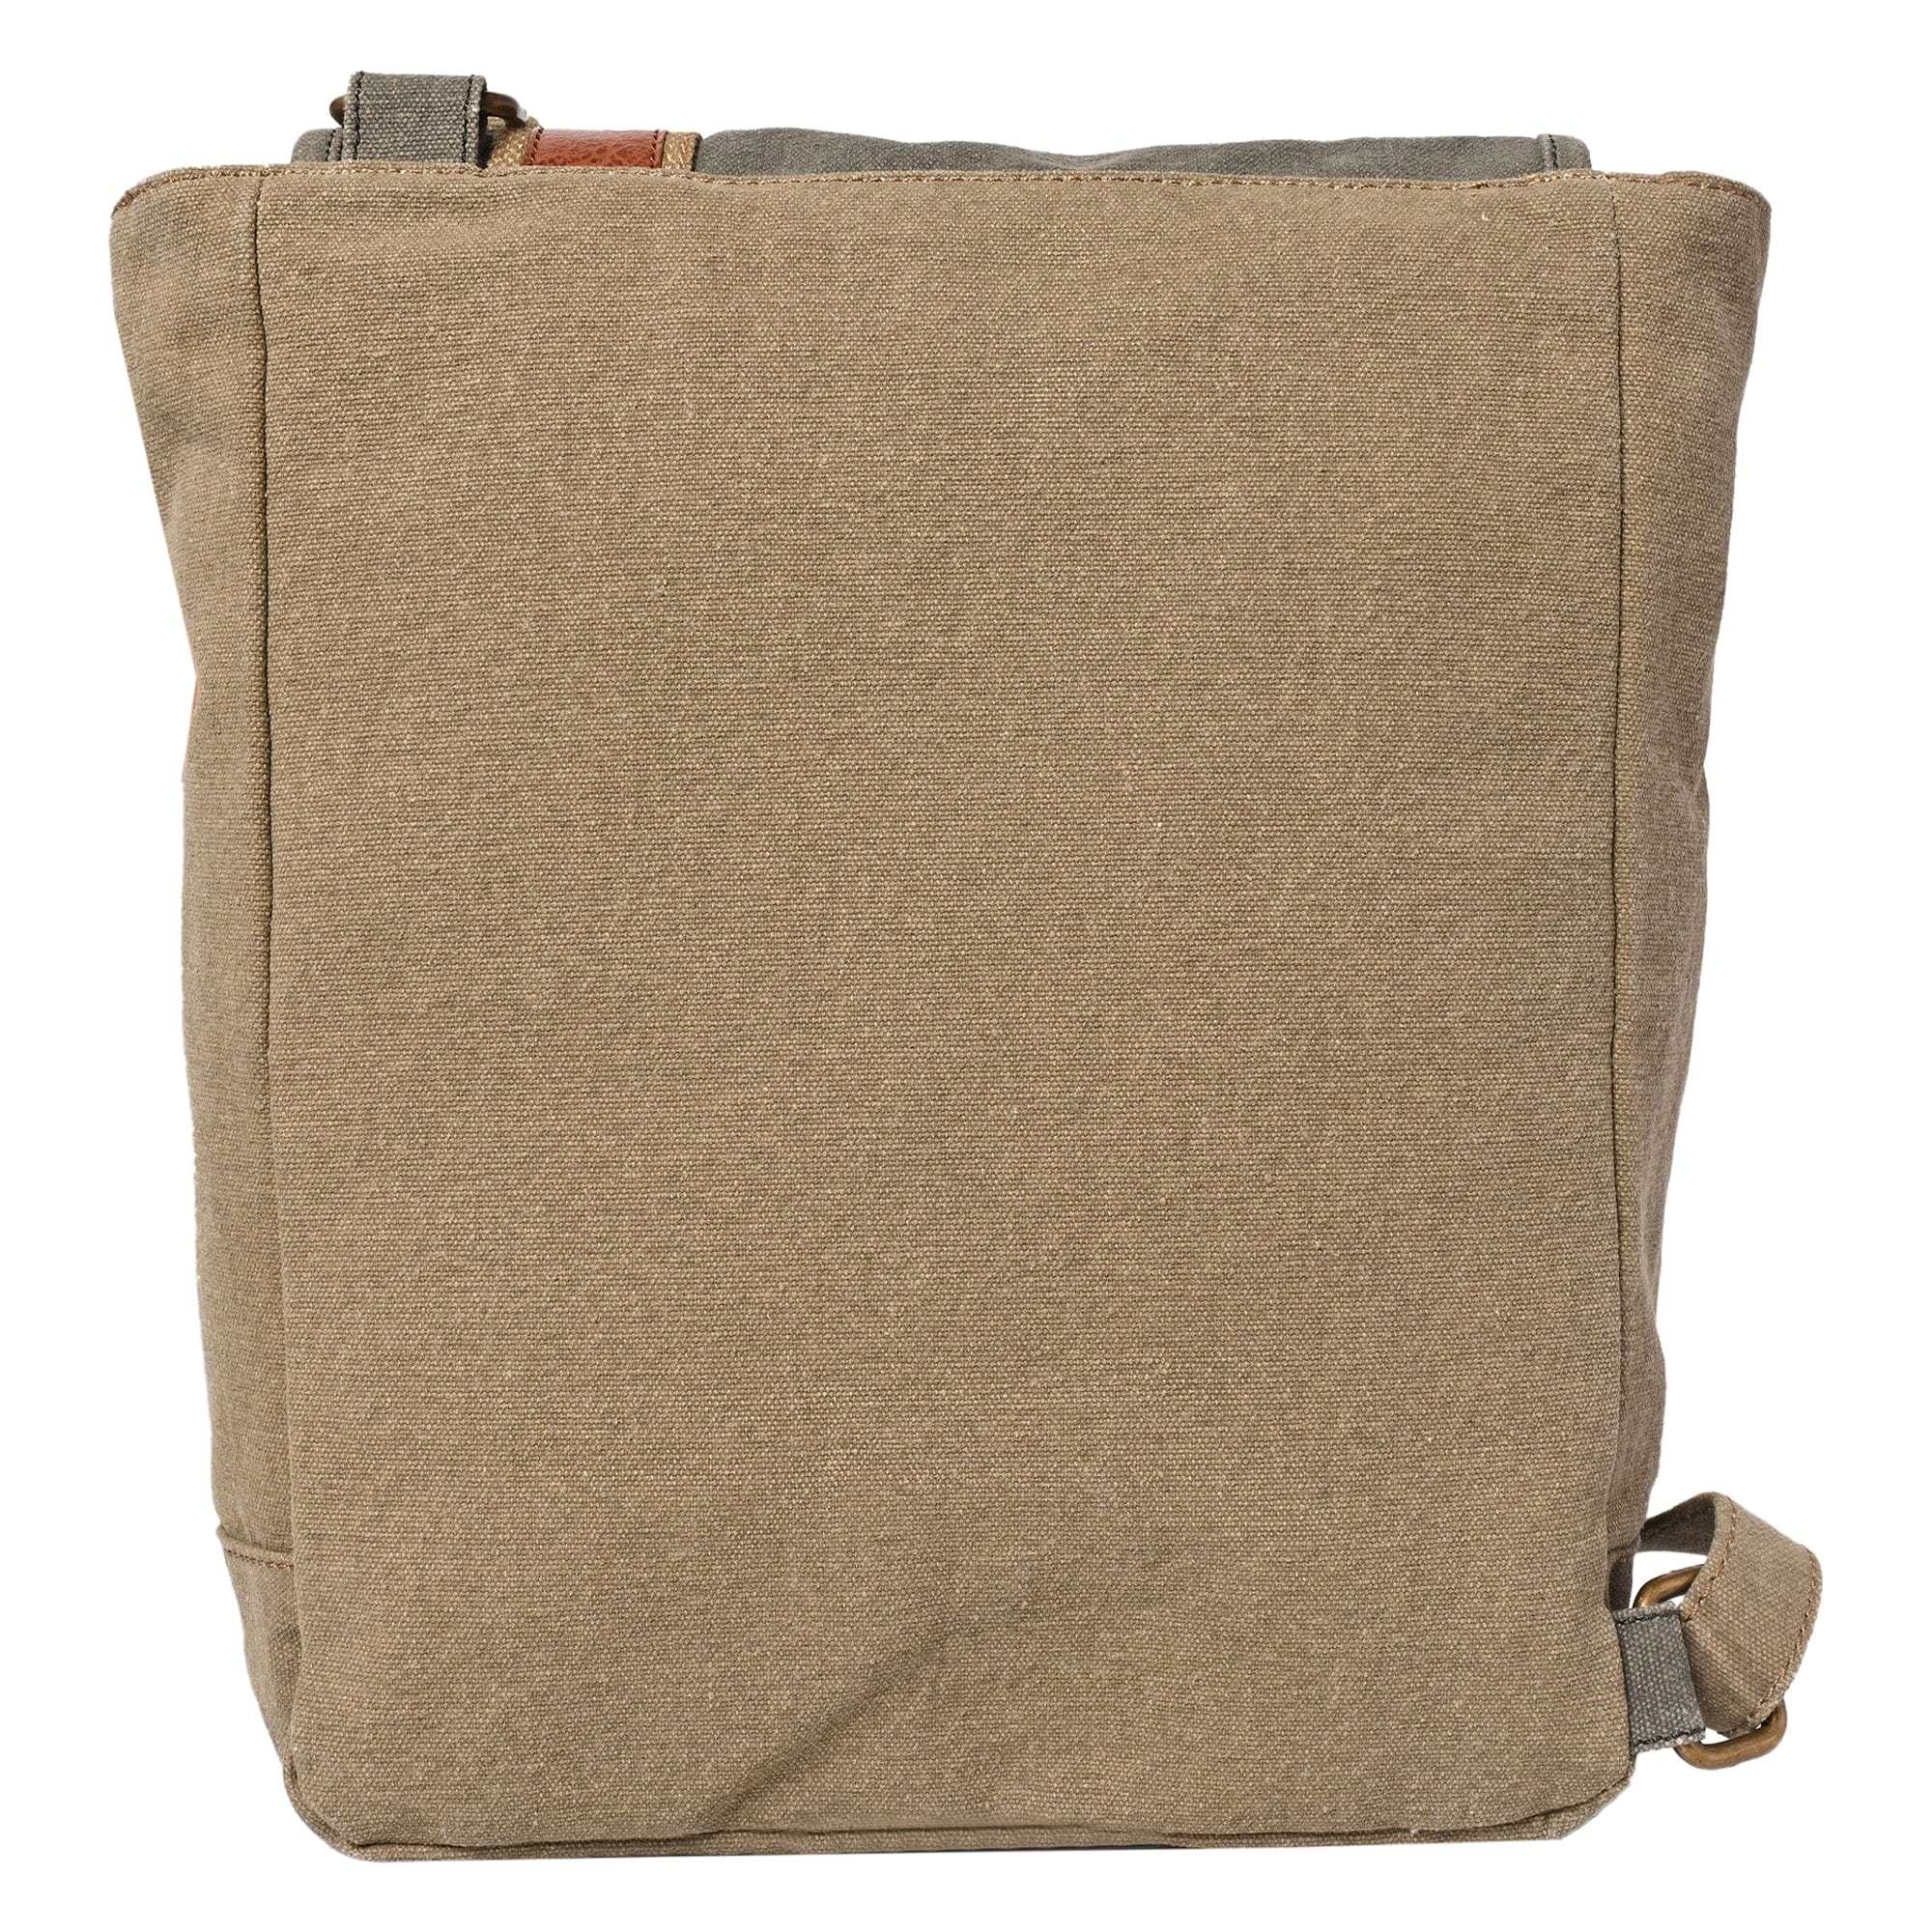 Mona-B Bag Mona B - Stone 100% Cotton Canvas Messenger Crossbody Bag with Stylish Design for Men and Women Multi Coloured